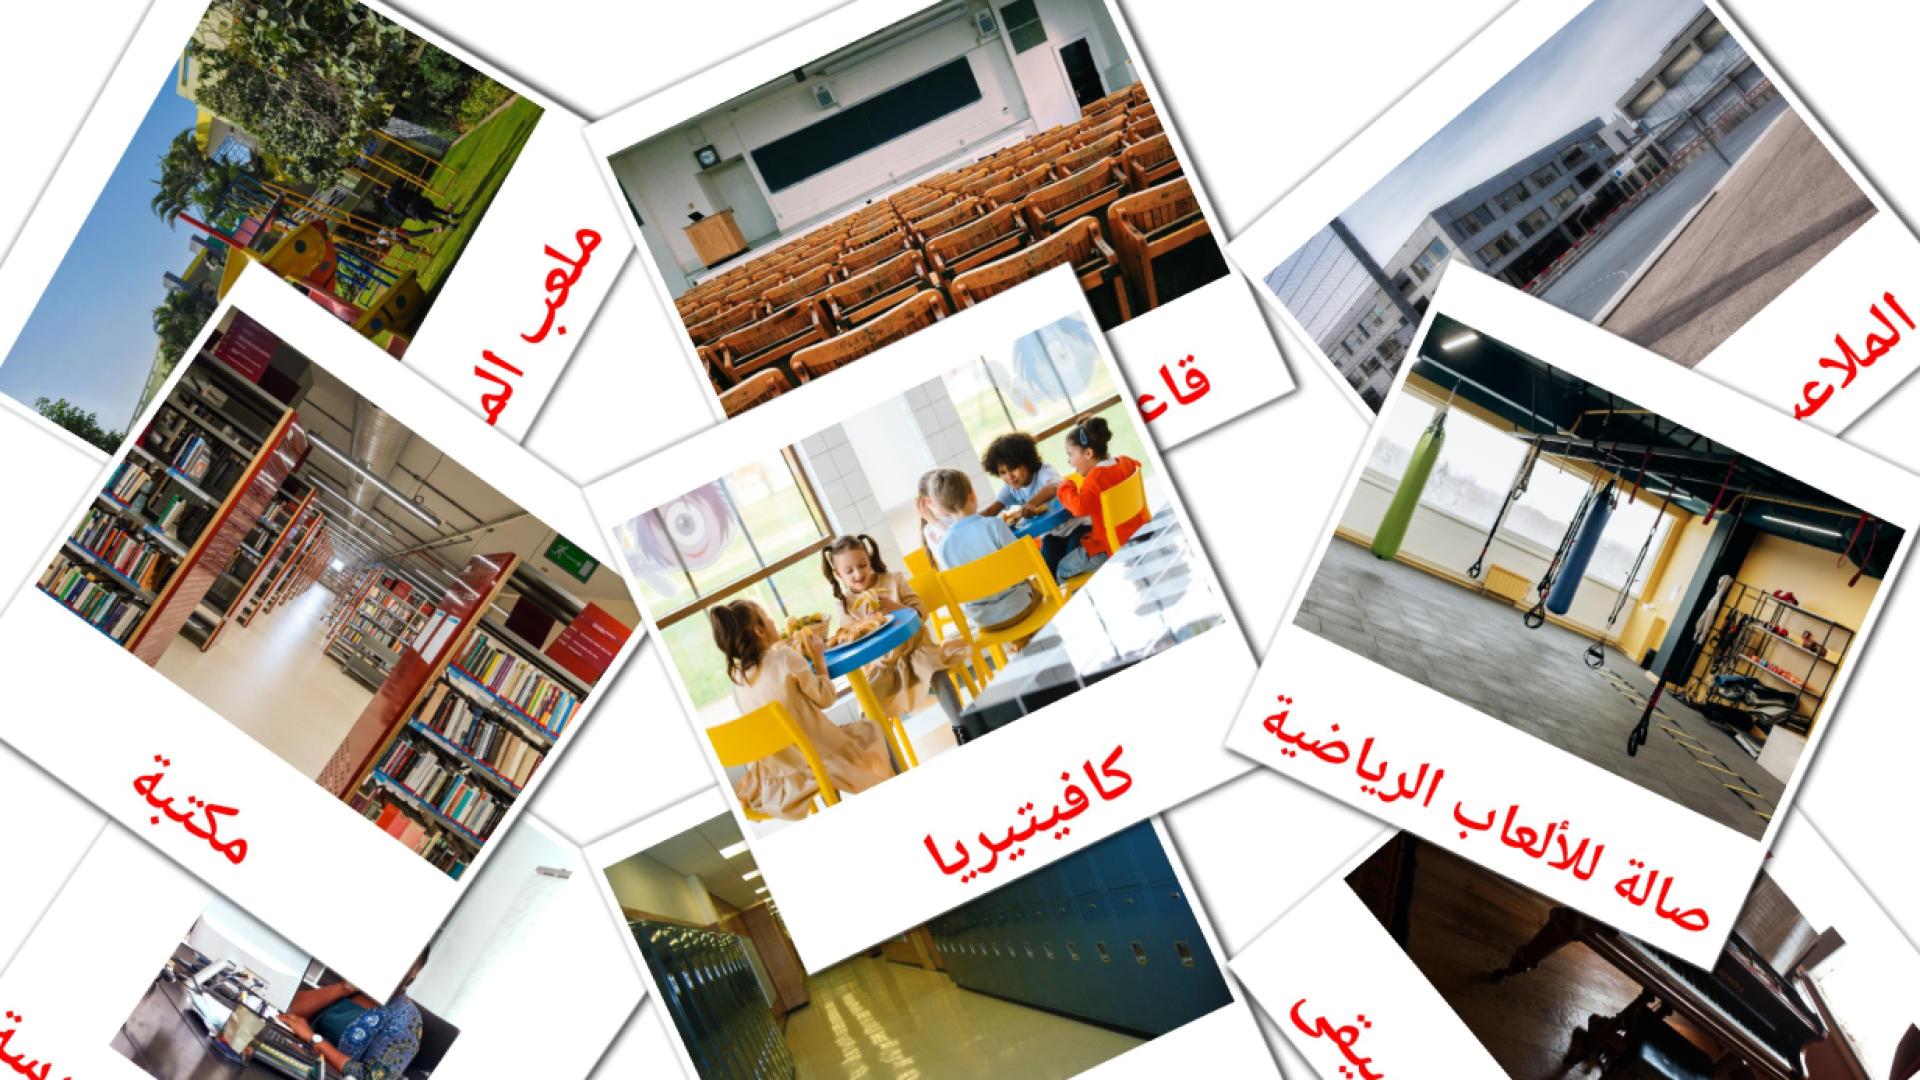 School building - arabic vocabulary cards